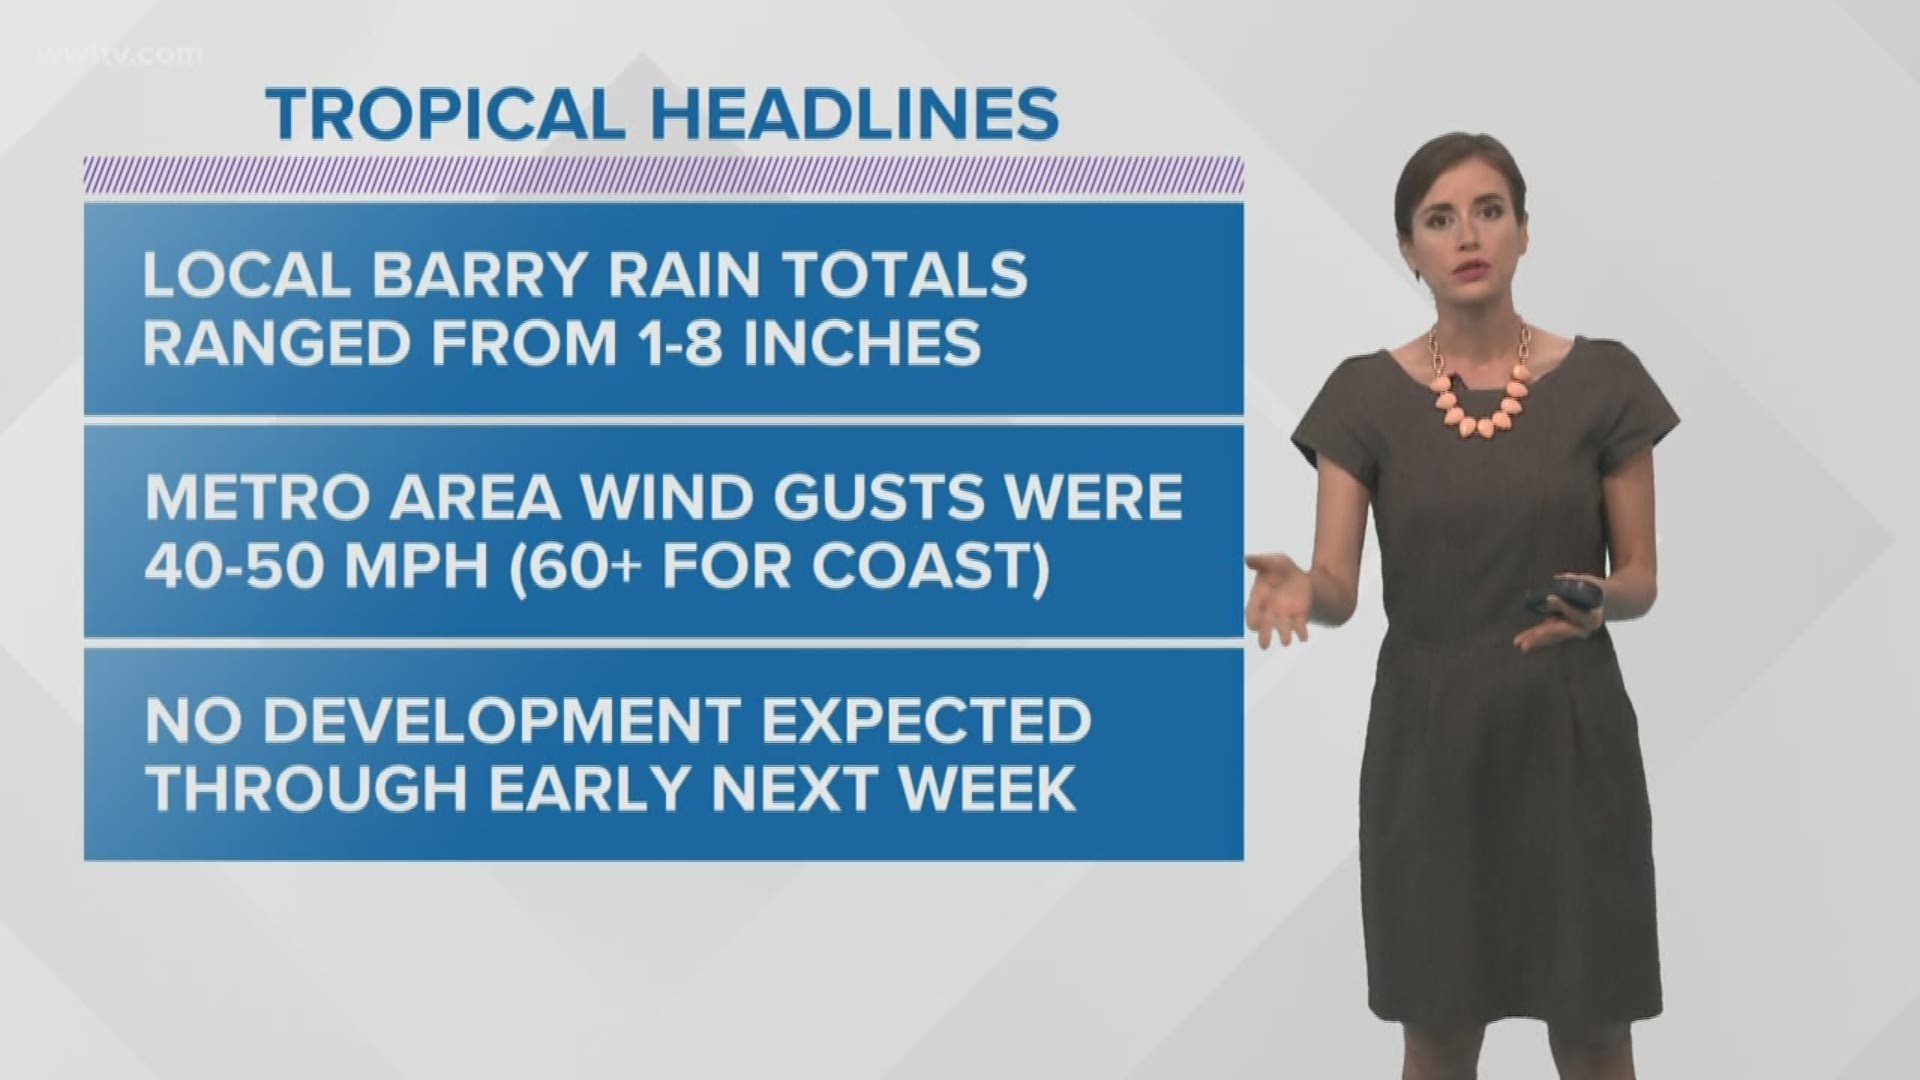 Meteorologist Alexandra Cranford has the tropics forecast on Wednesday, July 17, 2019.